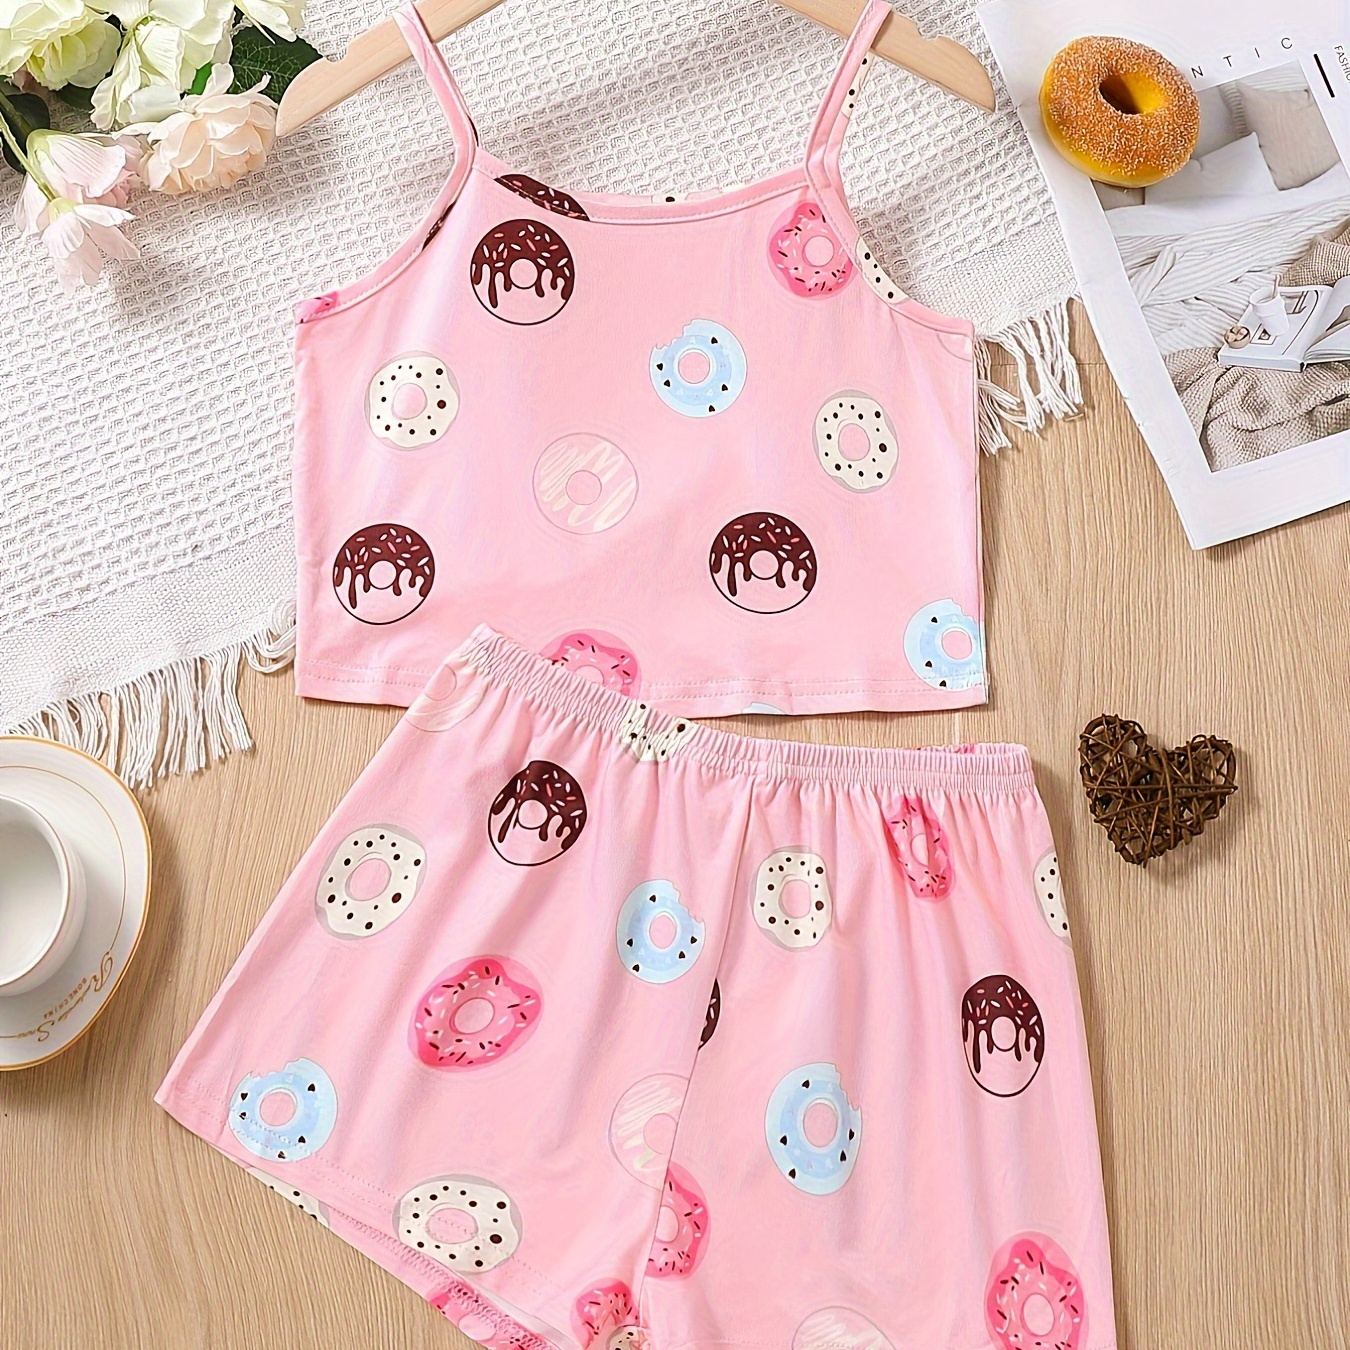 

Girls 2pcs Cute Donut Pattern Print Summer Loungewear, Cami Crop Top & Short Set, Sweet Pattern Comfy Pj Set, Kid's Cozy Sleepwear Outfit